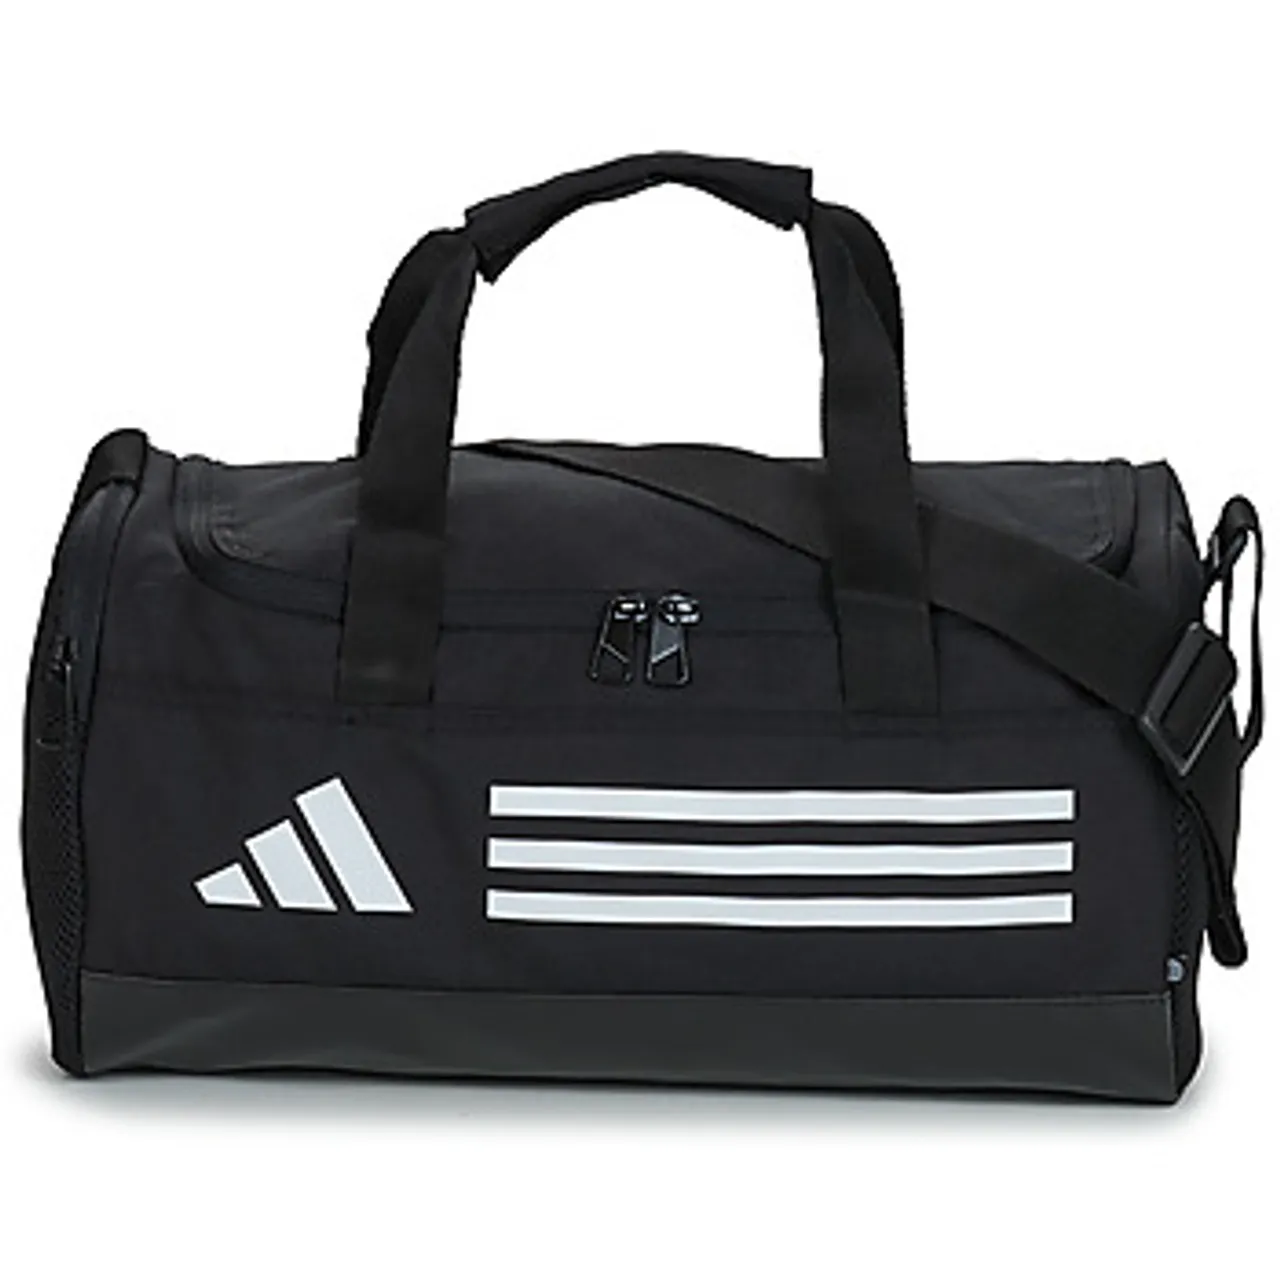 adidas  TR DUFFLE XS  women's Sports bag in Black